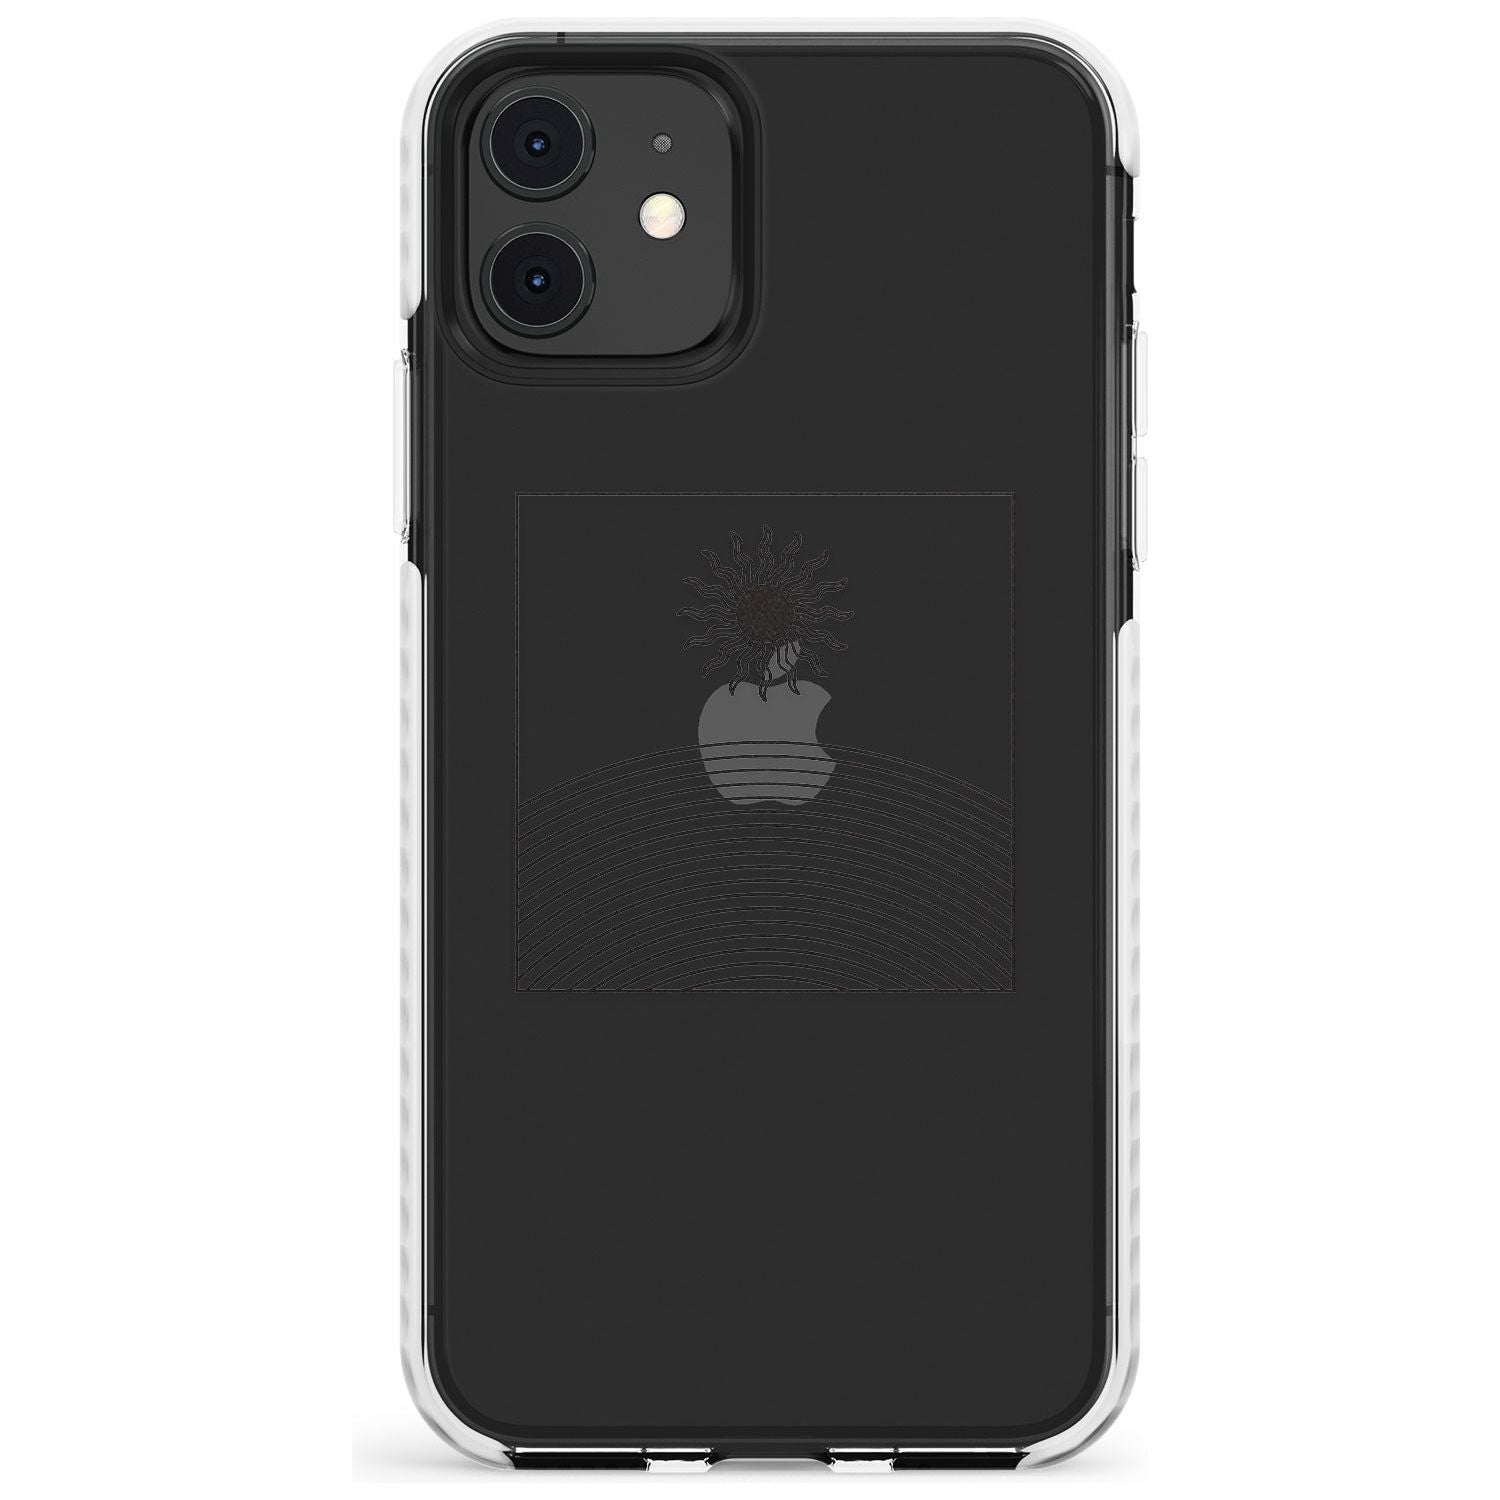 Framed Linework: Rising Sun Slim TPU Phone Case for iPhone 11